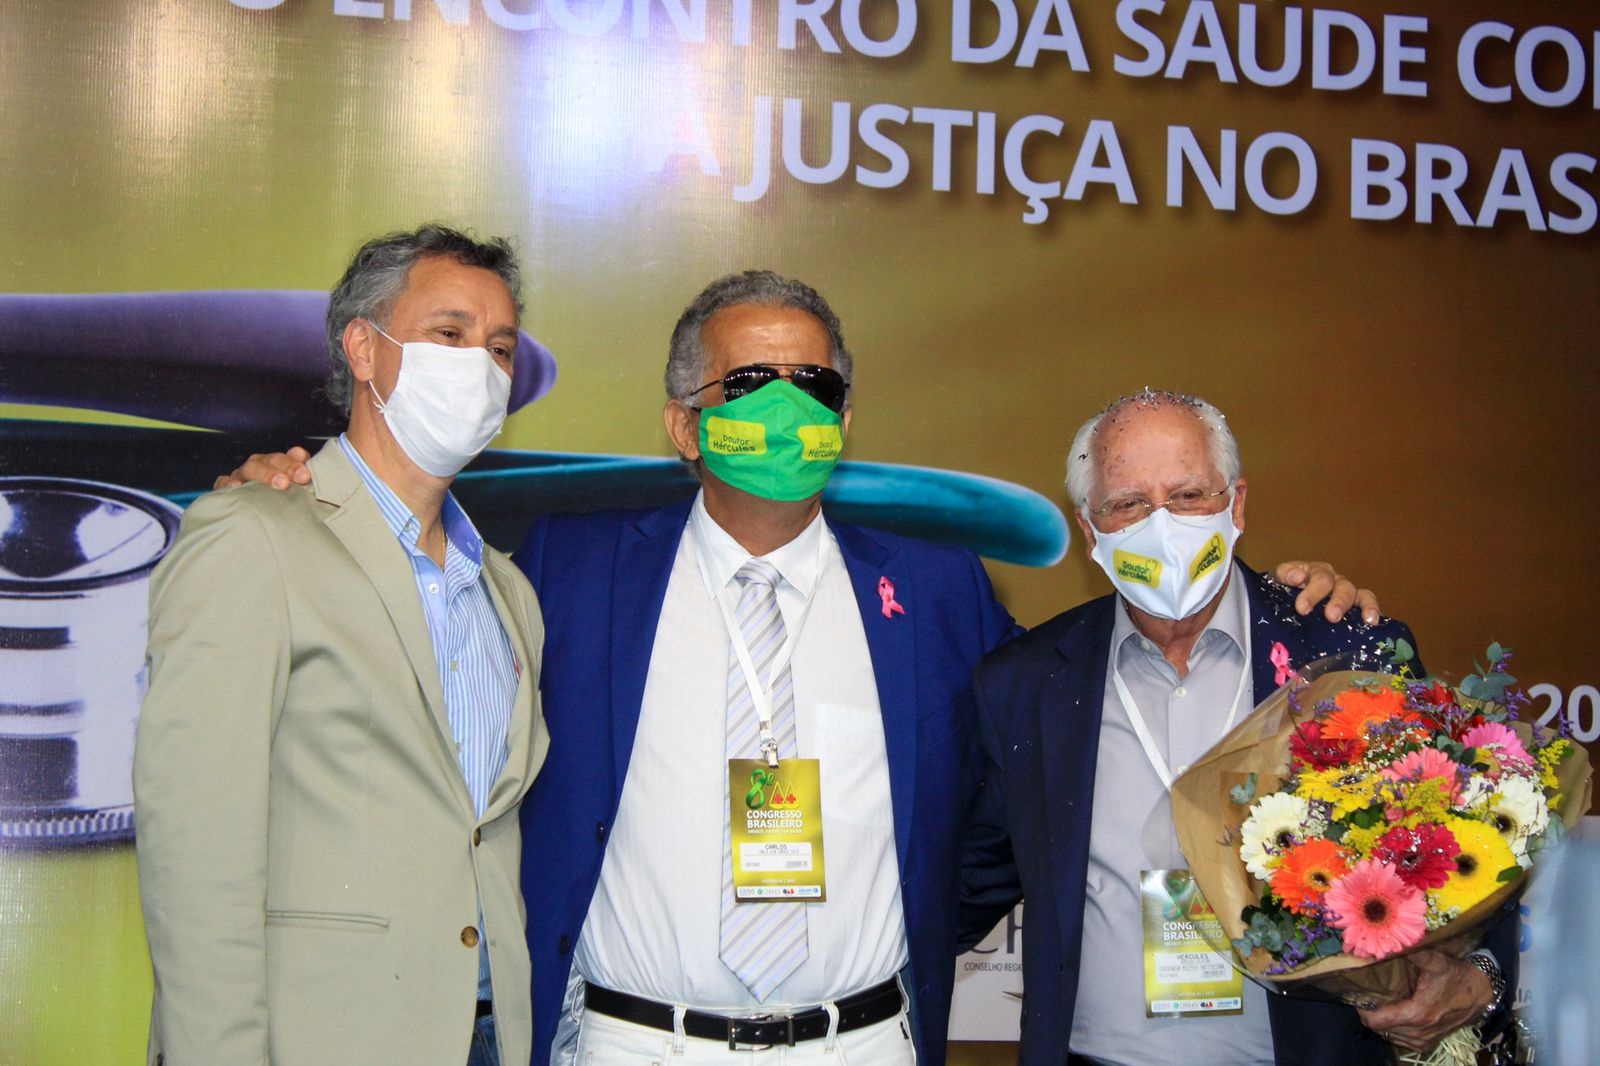 8 congresso brasileiro medico juridico da saude 29